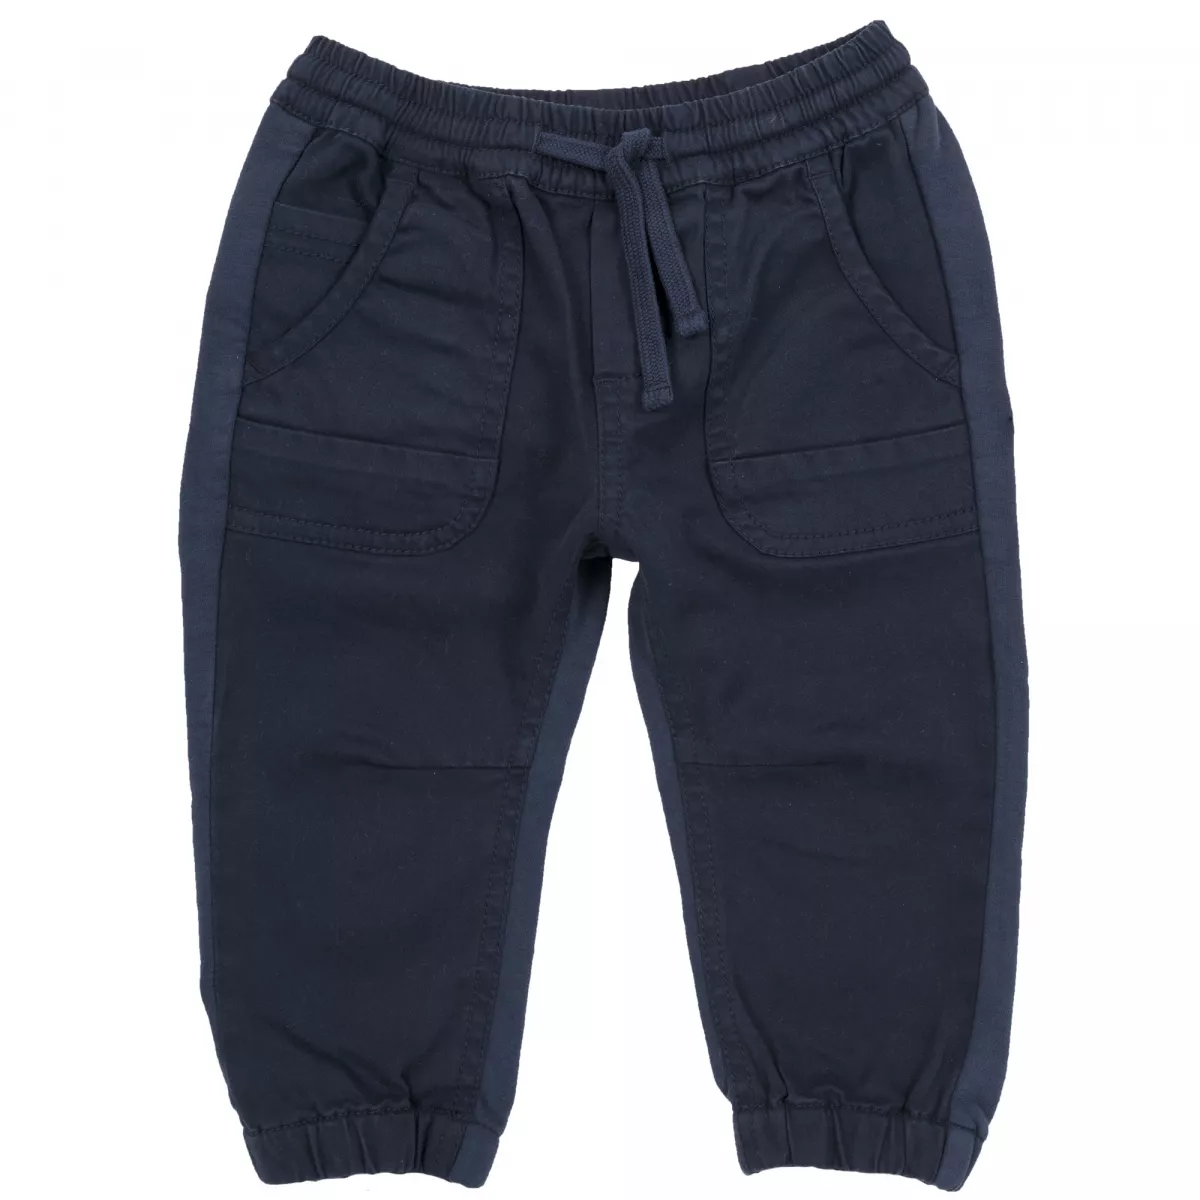 Pantalon copii Chicco, albastru inchis, 86